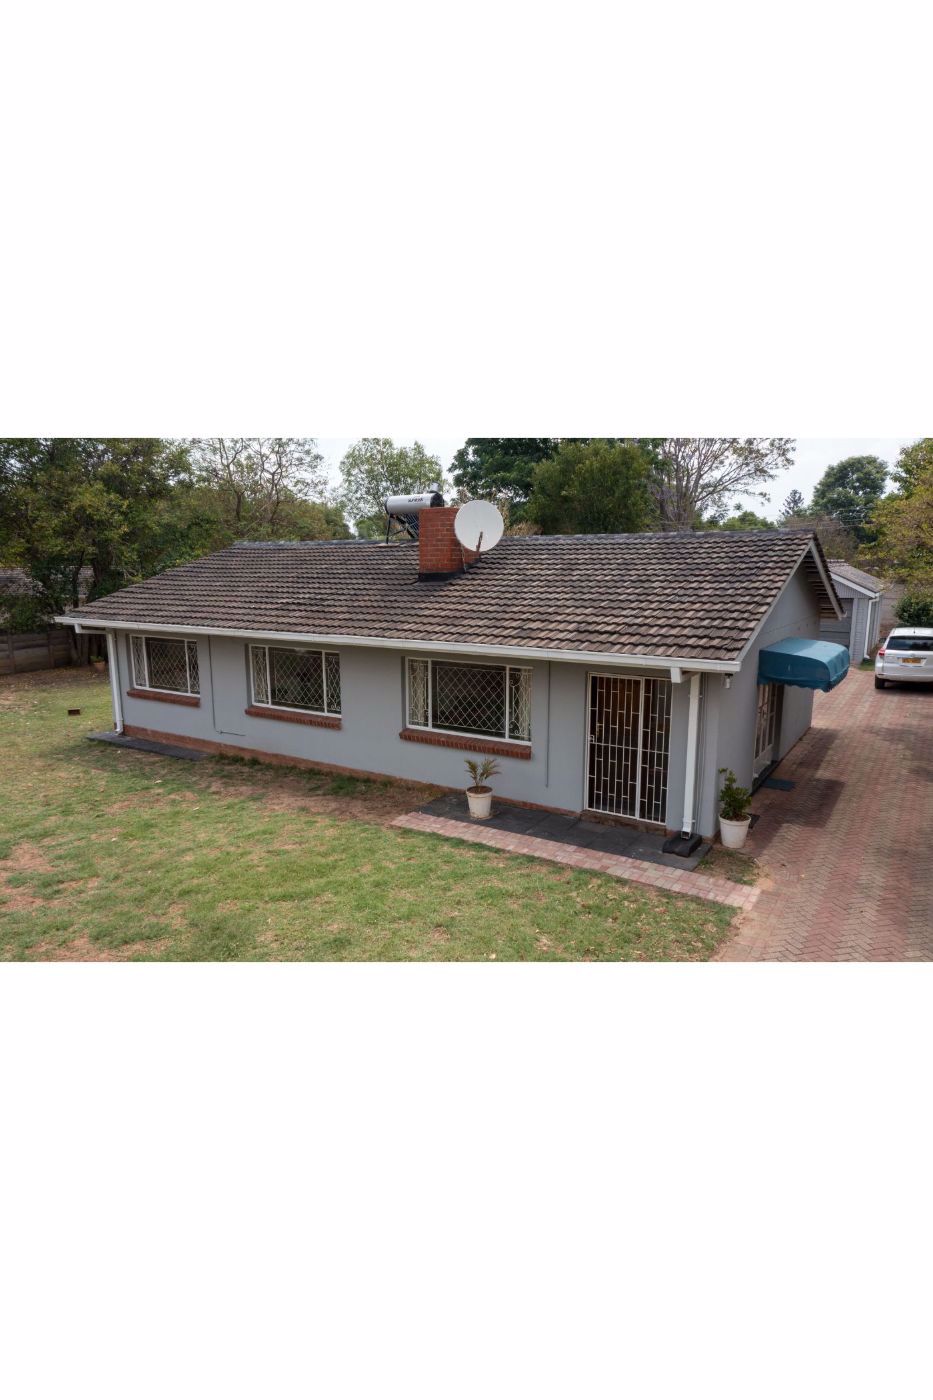 3 bedroom house for sale in Eastlea North (Zimbabwe)